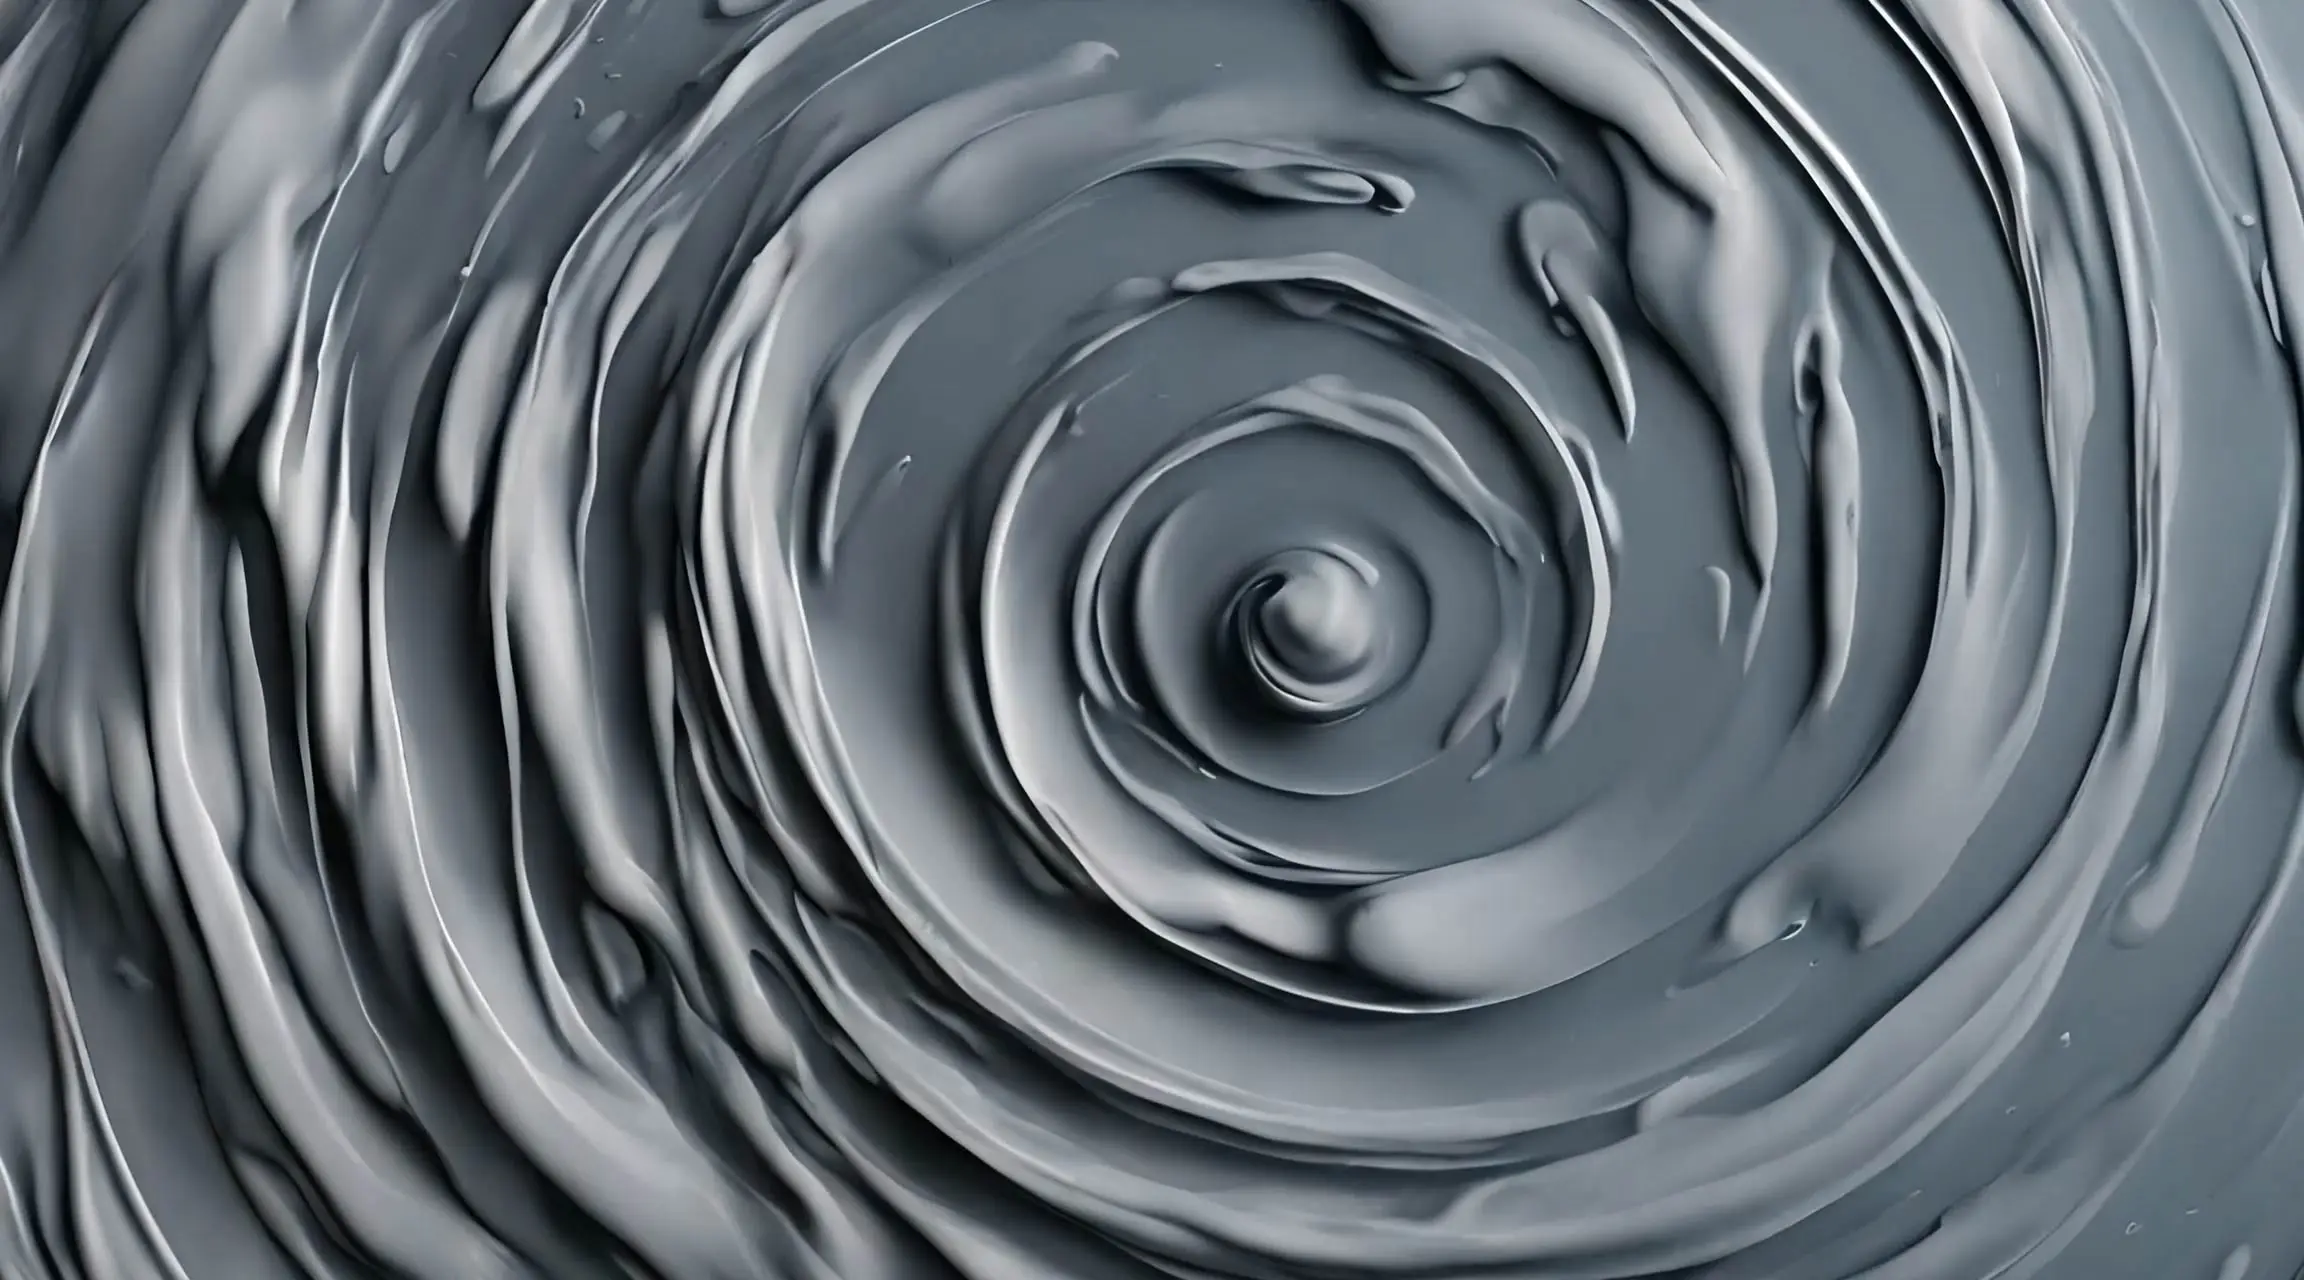 Metallic Liquid Spiral Abstract Stock Video